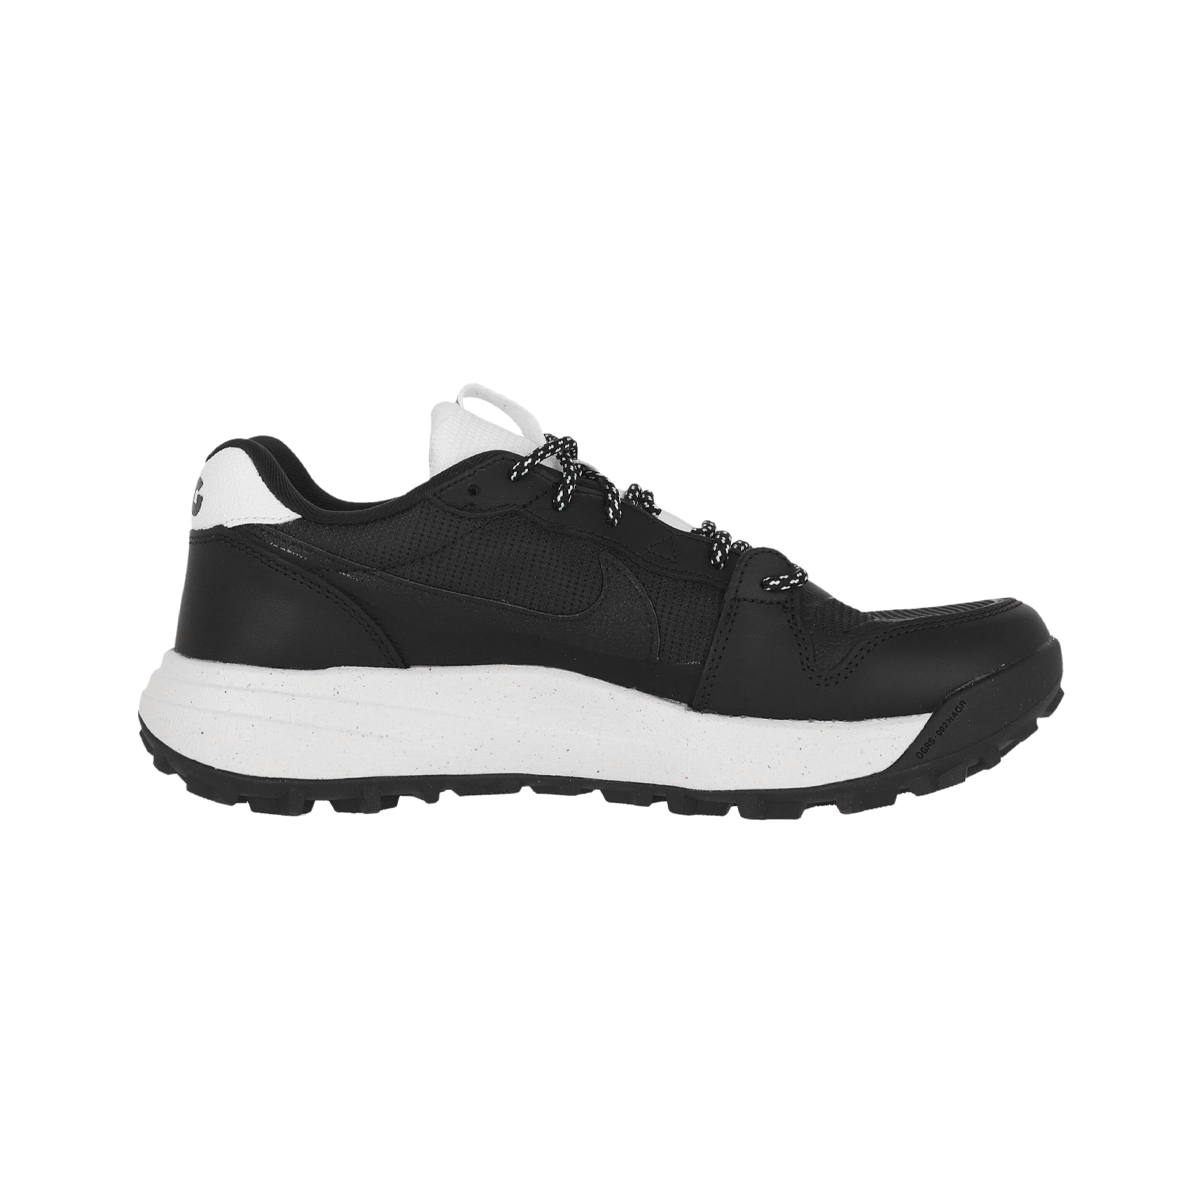 Zapatilla Nike ACG Lowcate Black/White | Nike | Brands | Drops ...